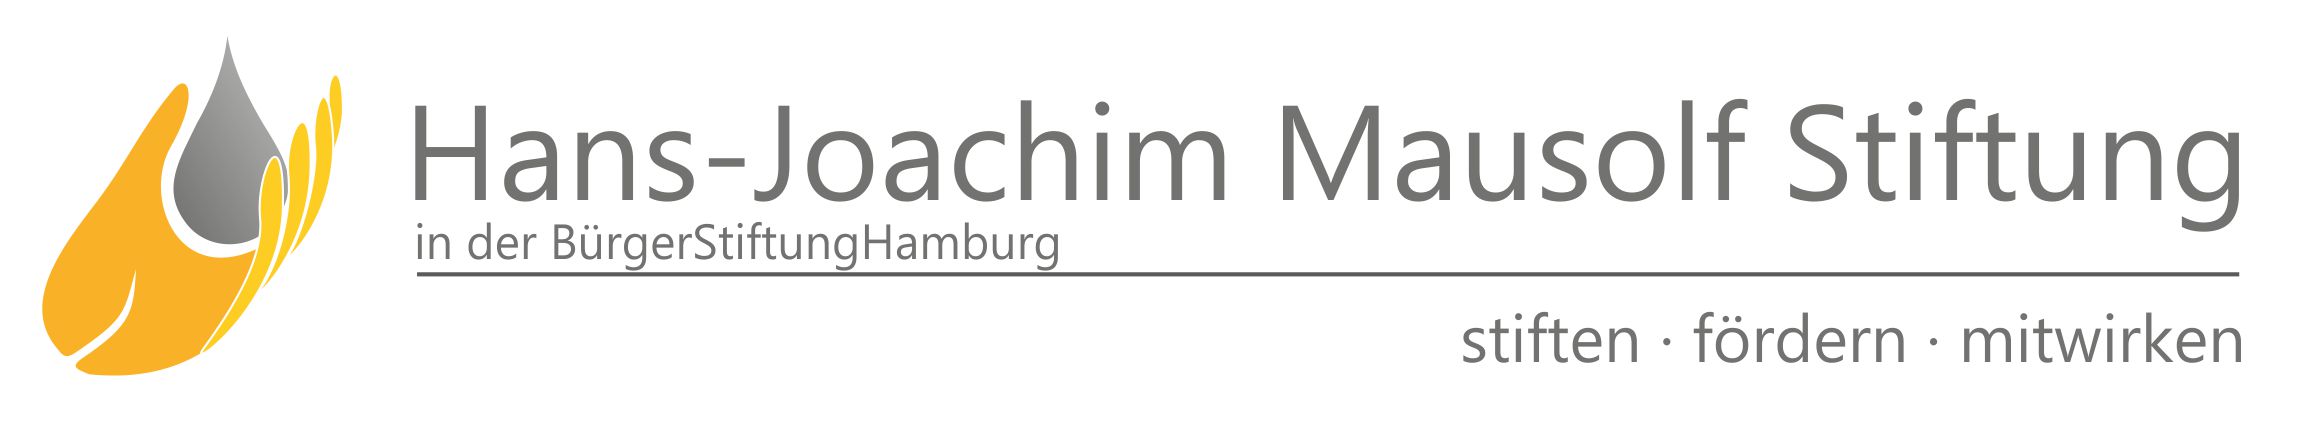 Hans-Joachim Mausolf Stiftung